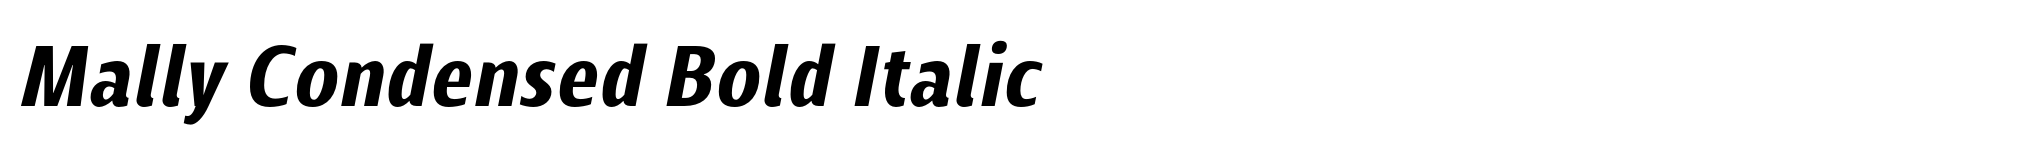 Mally Condensed Bold Italic image